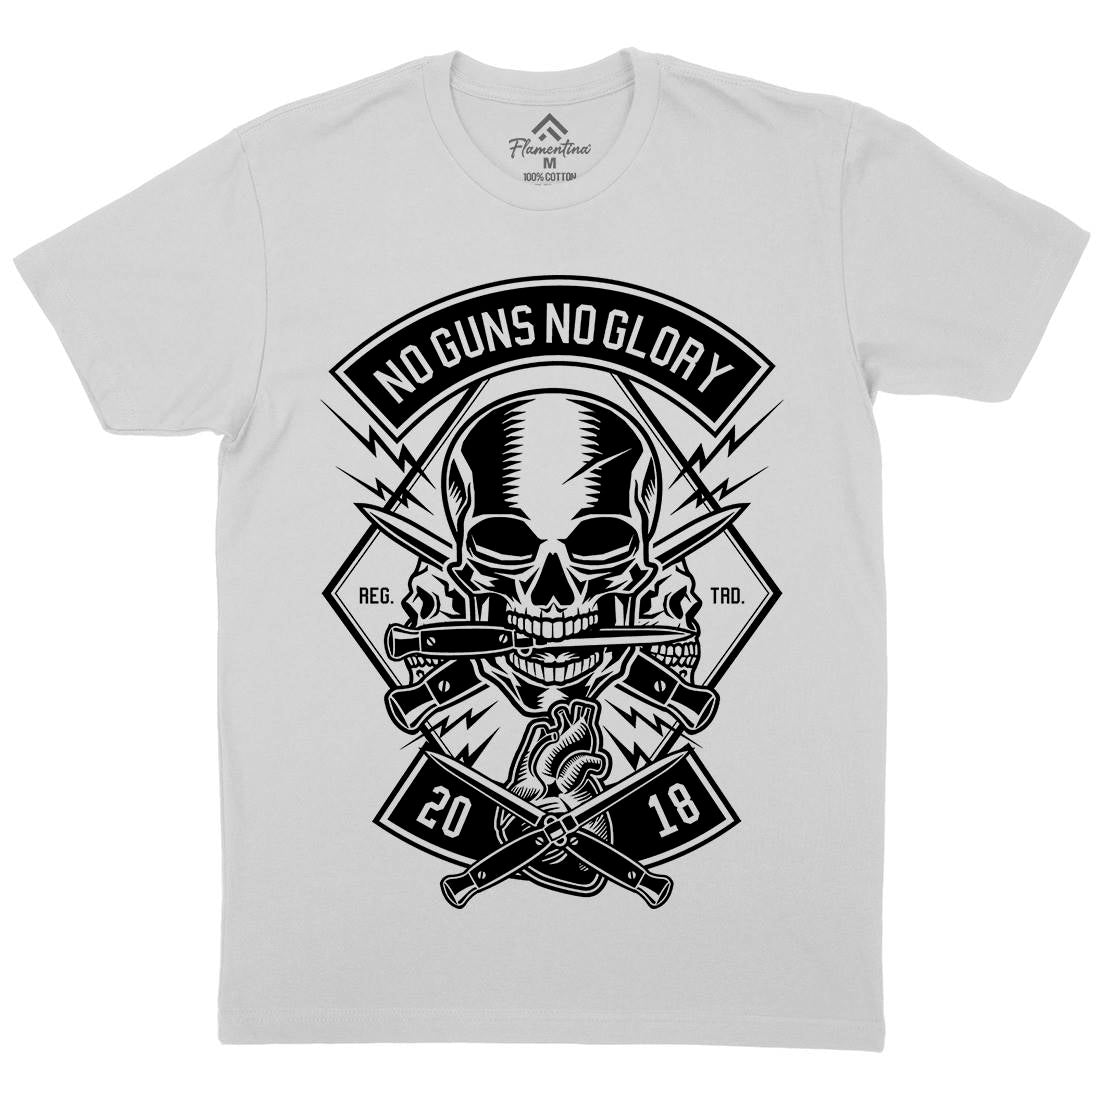 No Guns No Glory Mens Crew Neck T-Shirt Army B588